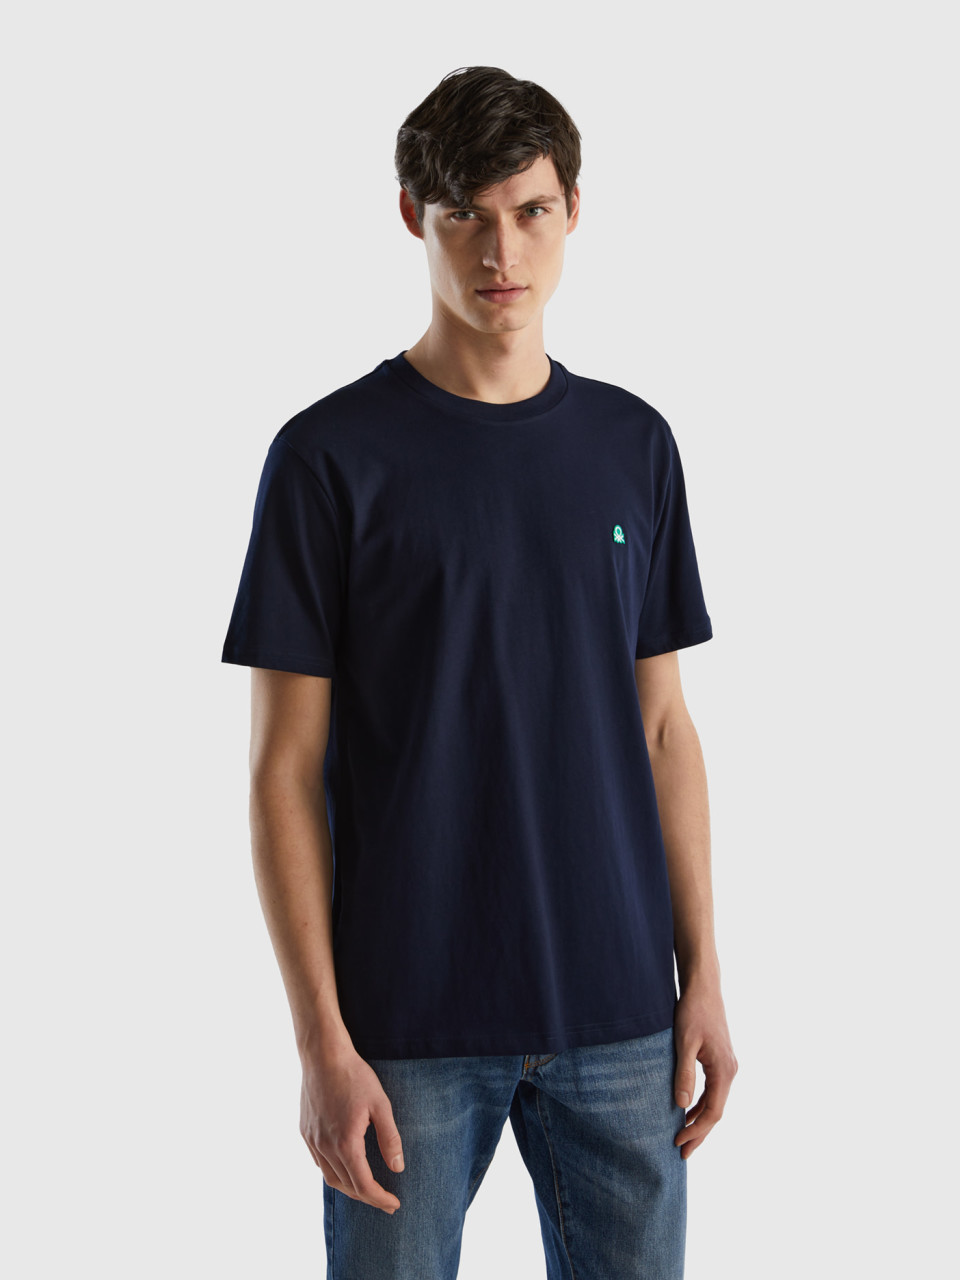 Benetton, 100% Organic Cotton Basic T-shirt, Dark Blue, Men